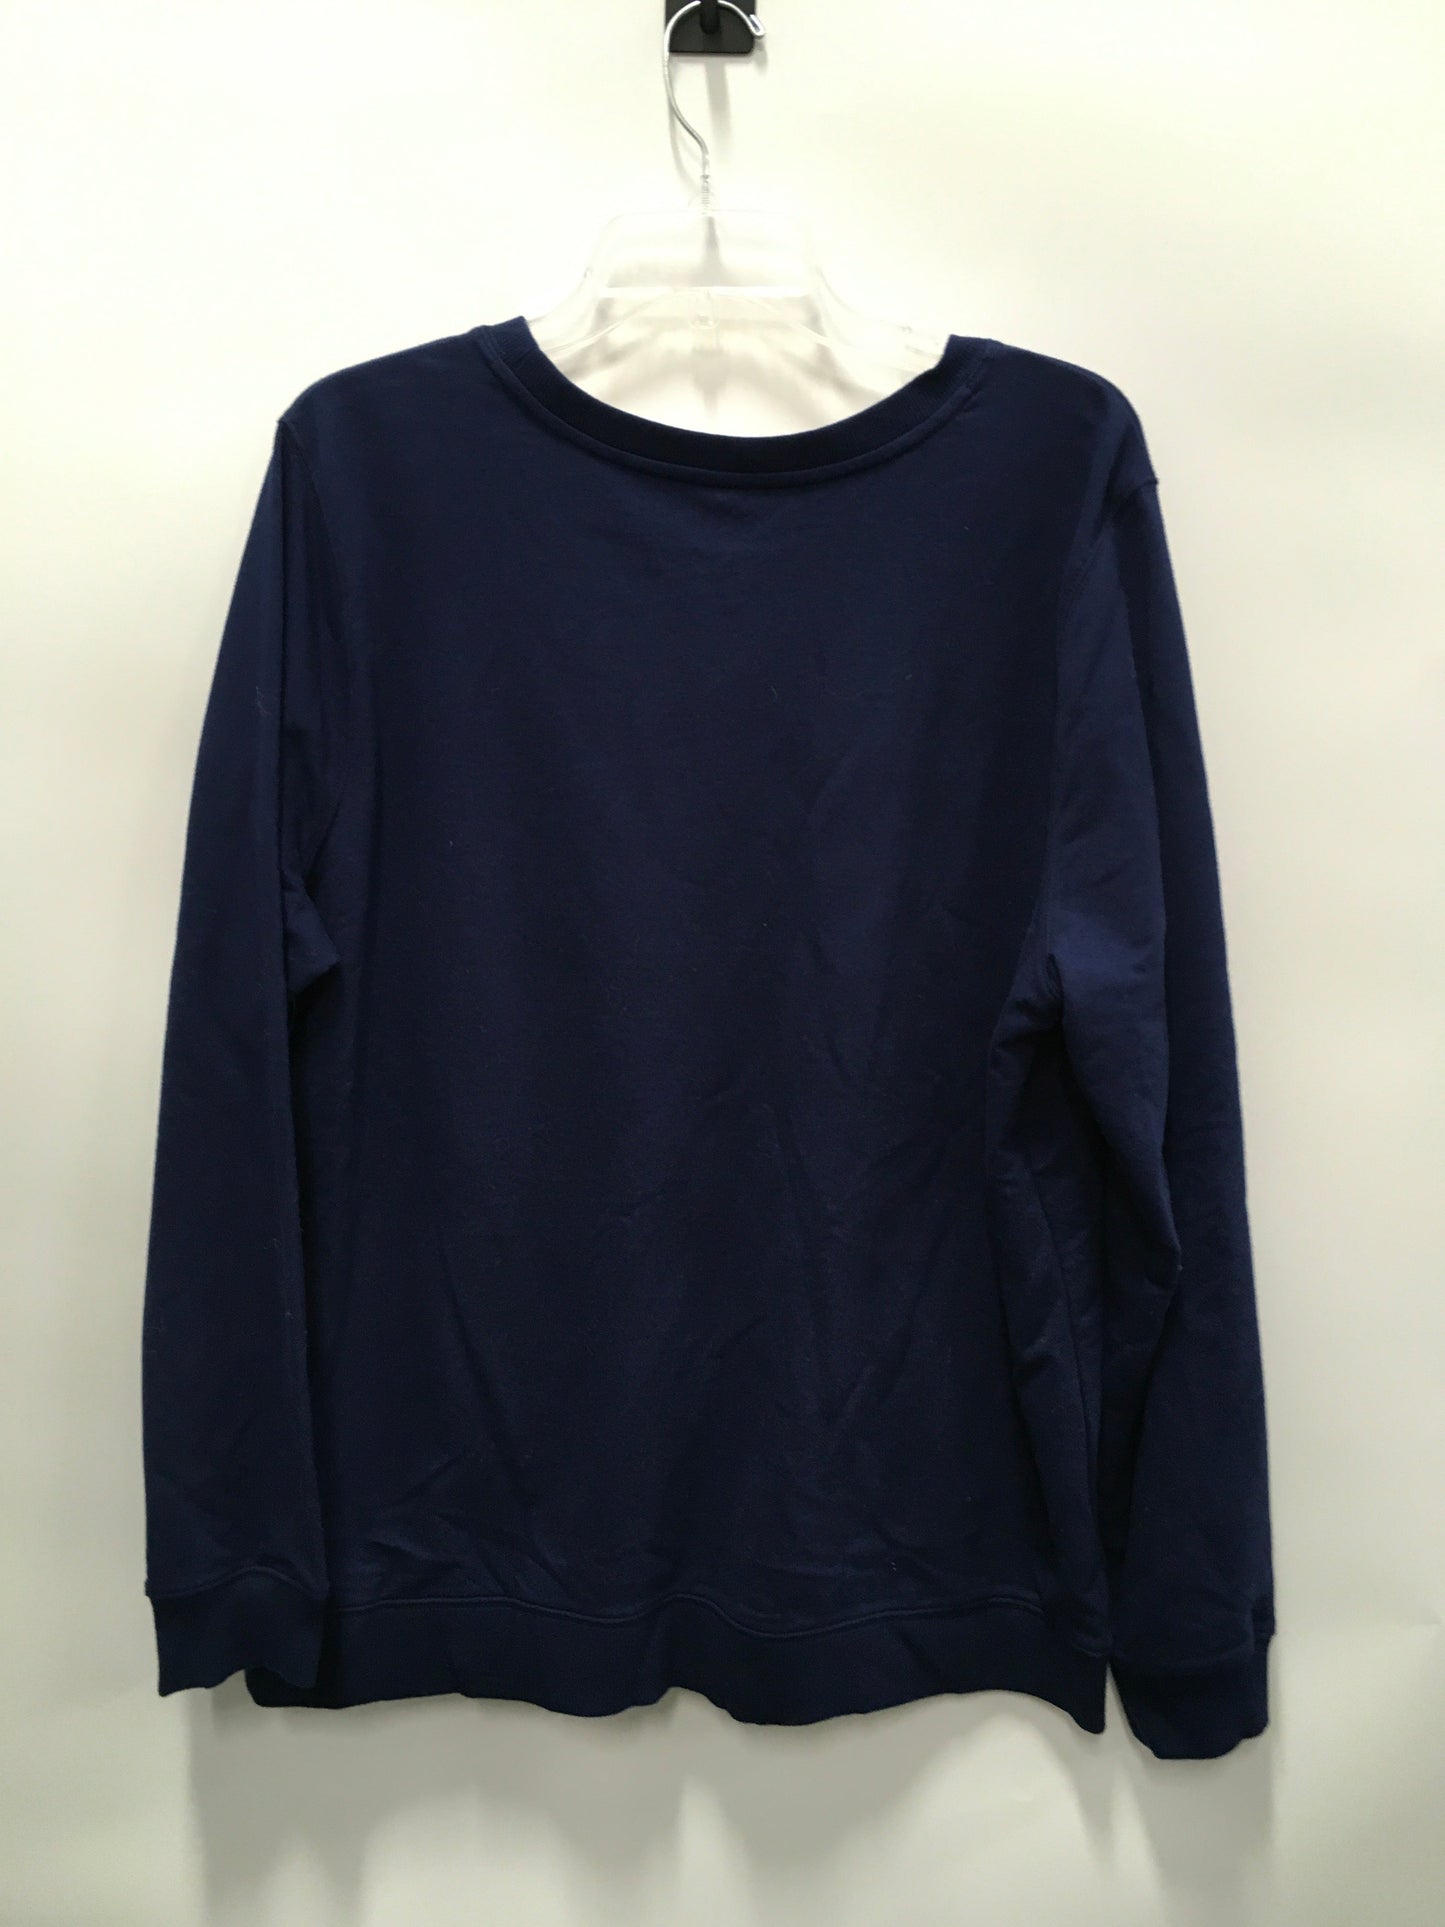 Blue Sweatshirt Crewneck St Johns Bay, Size 1x